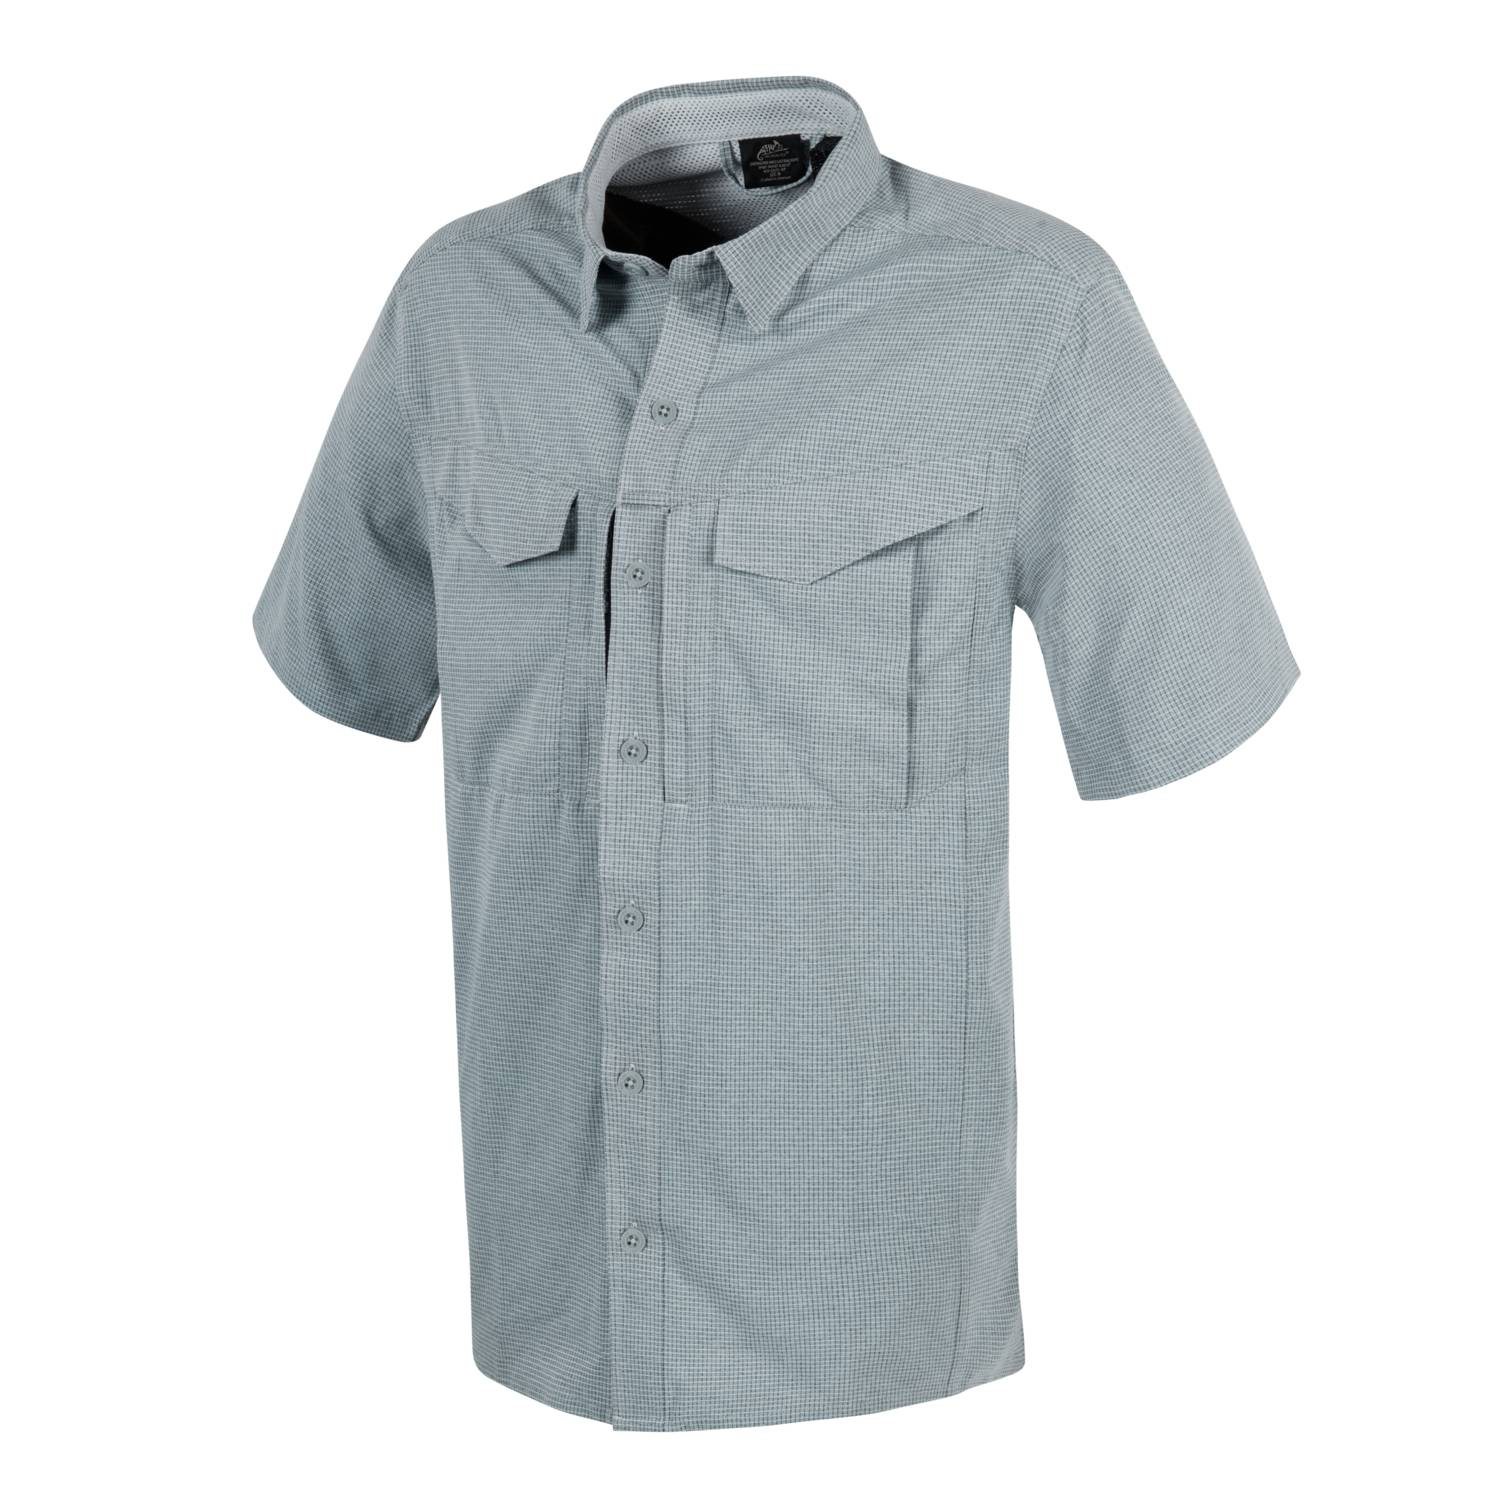 HELIKON-Tex Classic Army t-shirt Comfort-fit outdoor Sport ocio-blanco